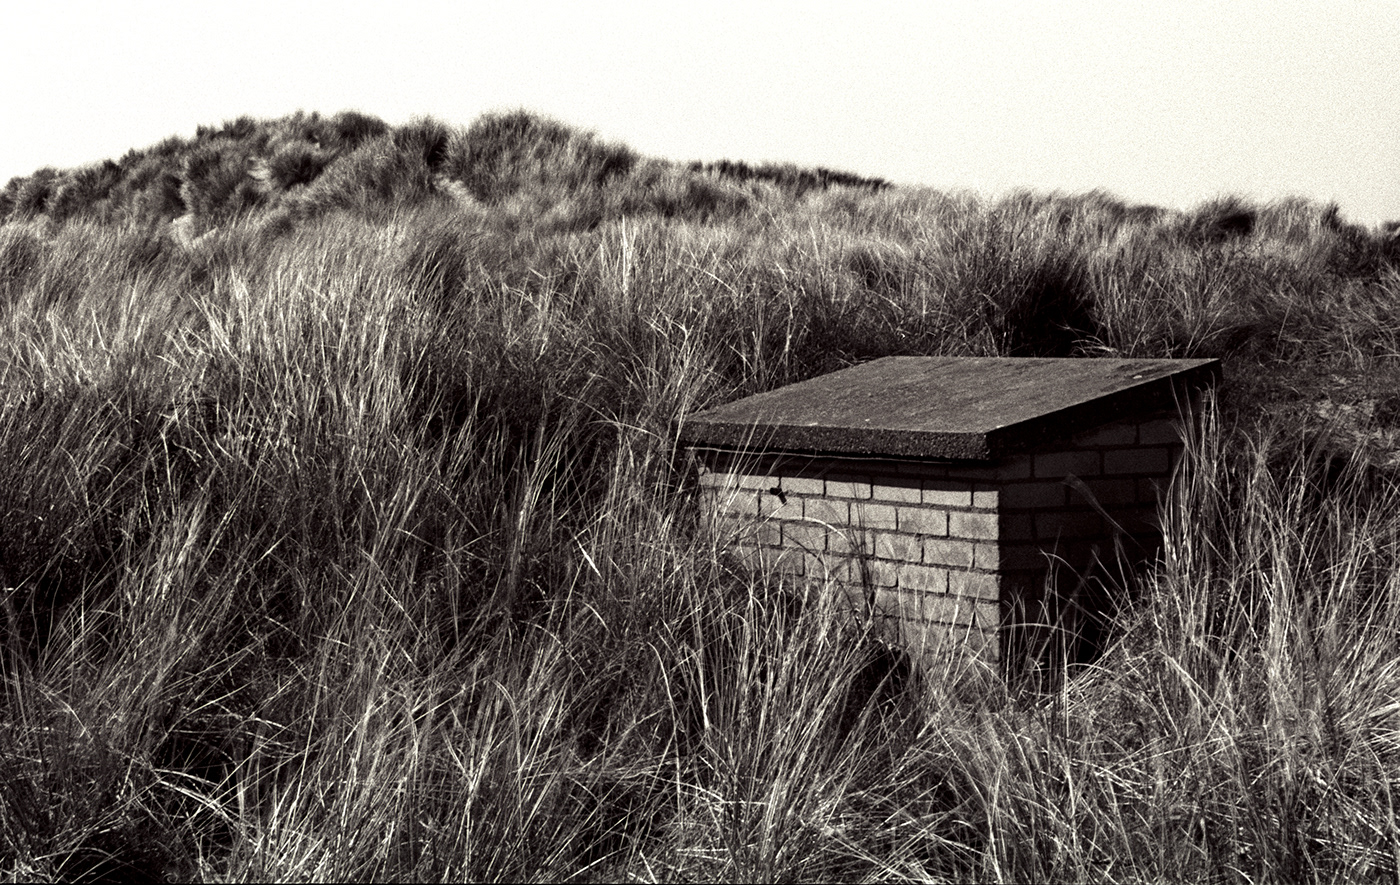 Monochrome image of a small brick bunker in dune grassland